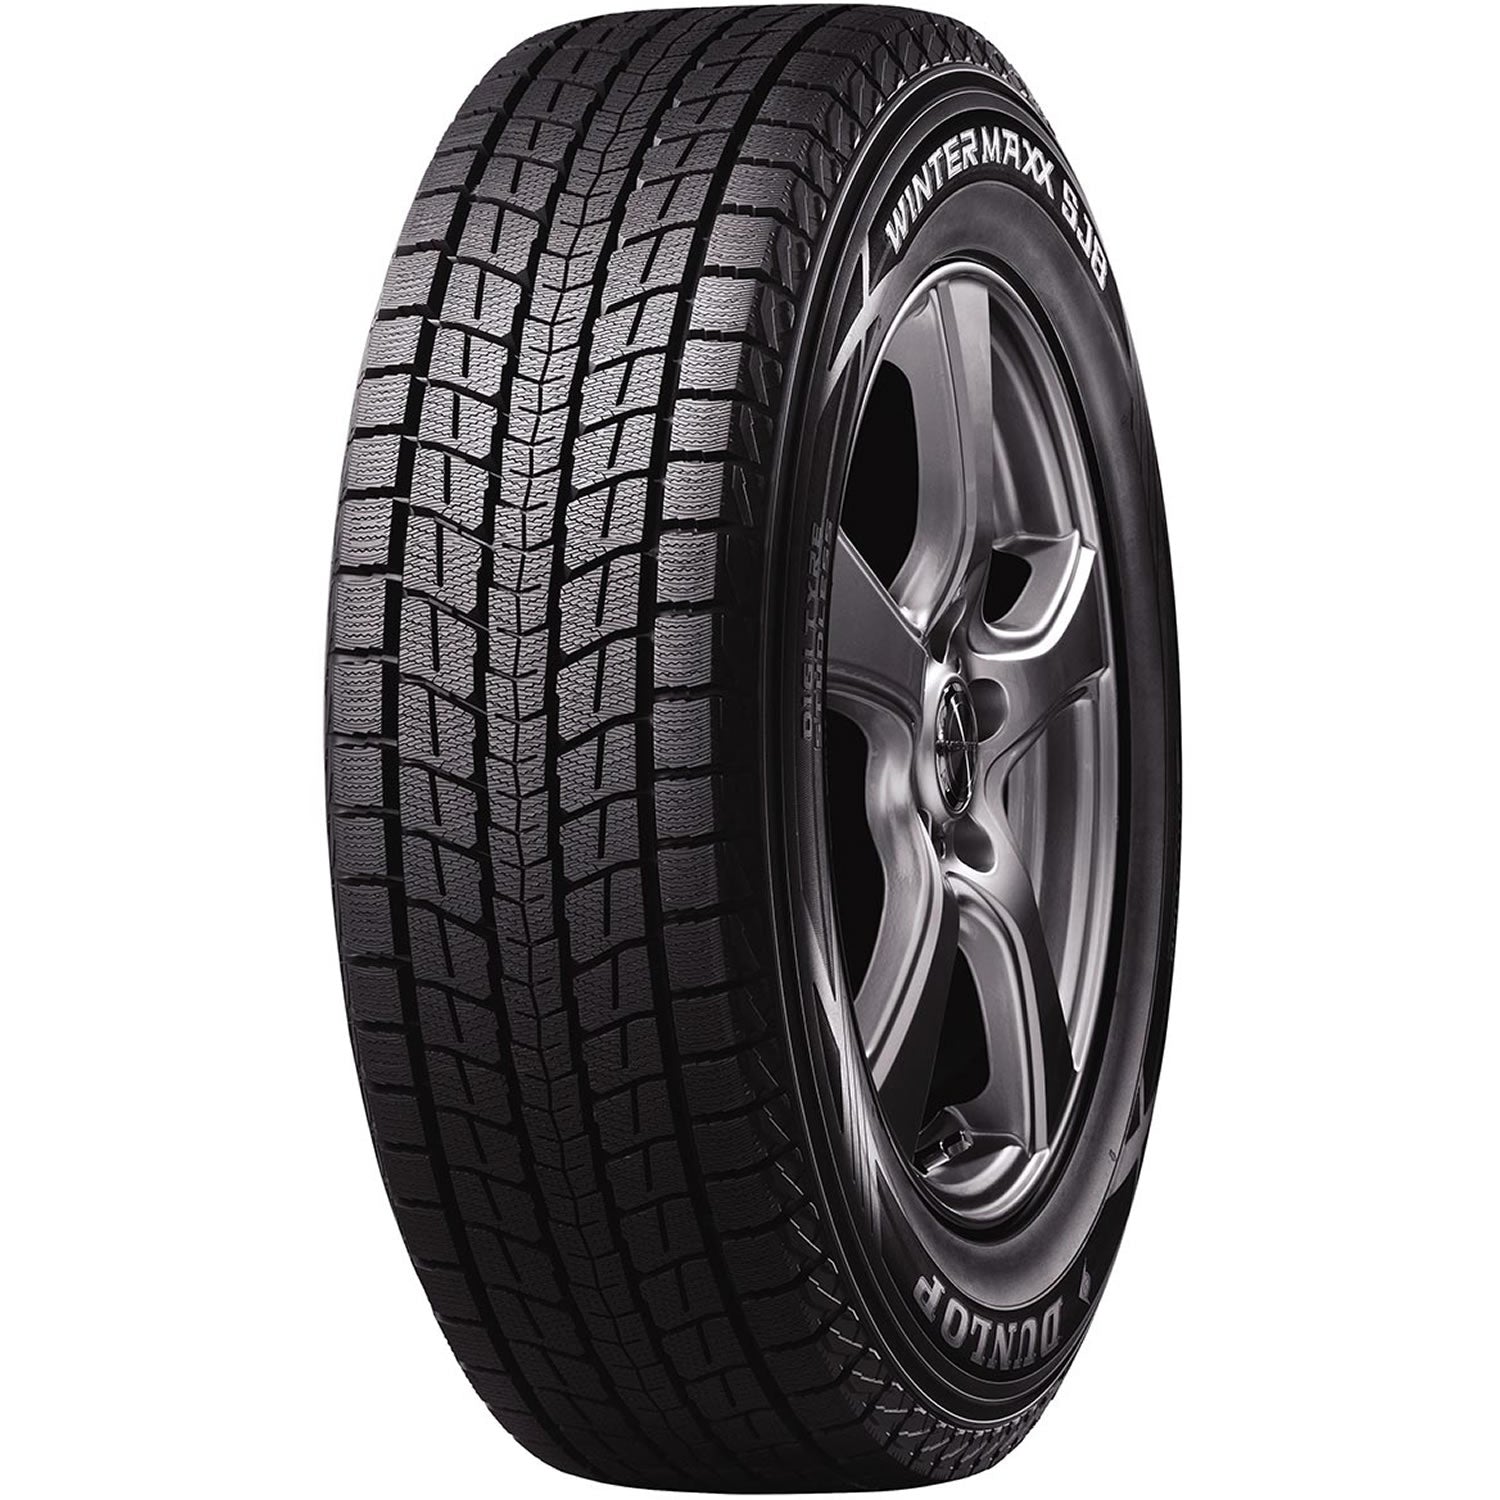 DUNLOP WINTER MAXX SJ8 265/65R17 (30.6X10.4R 17) Tires